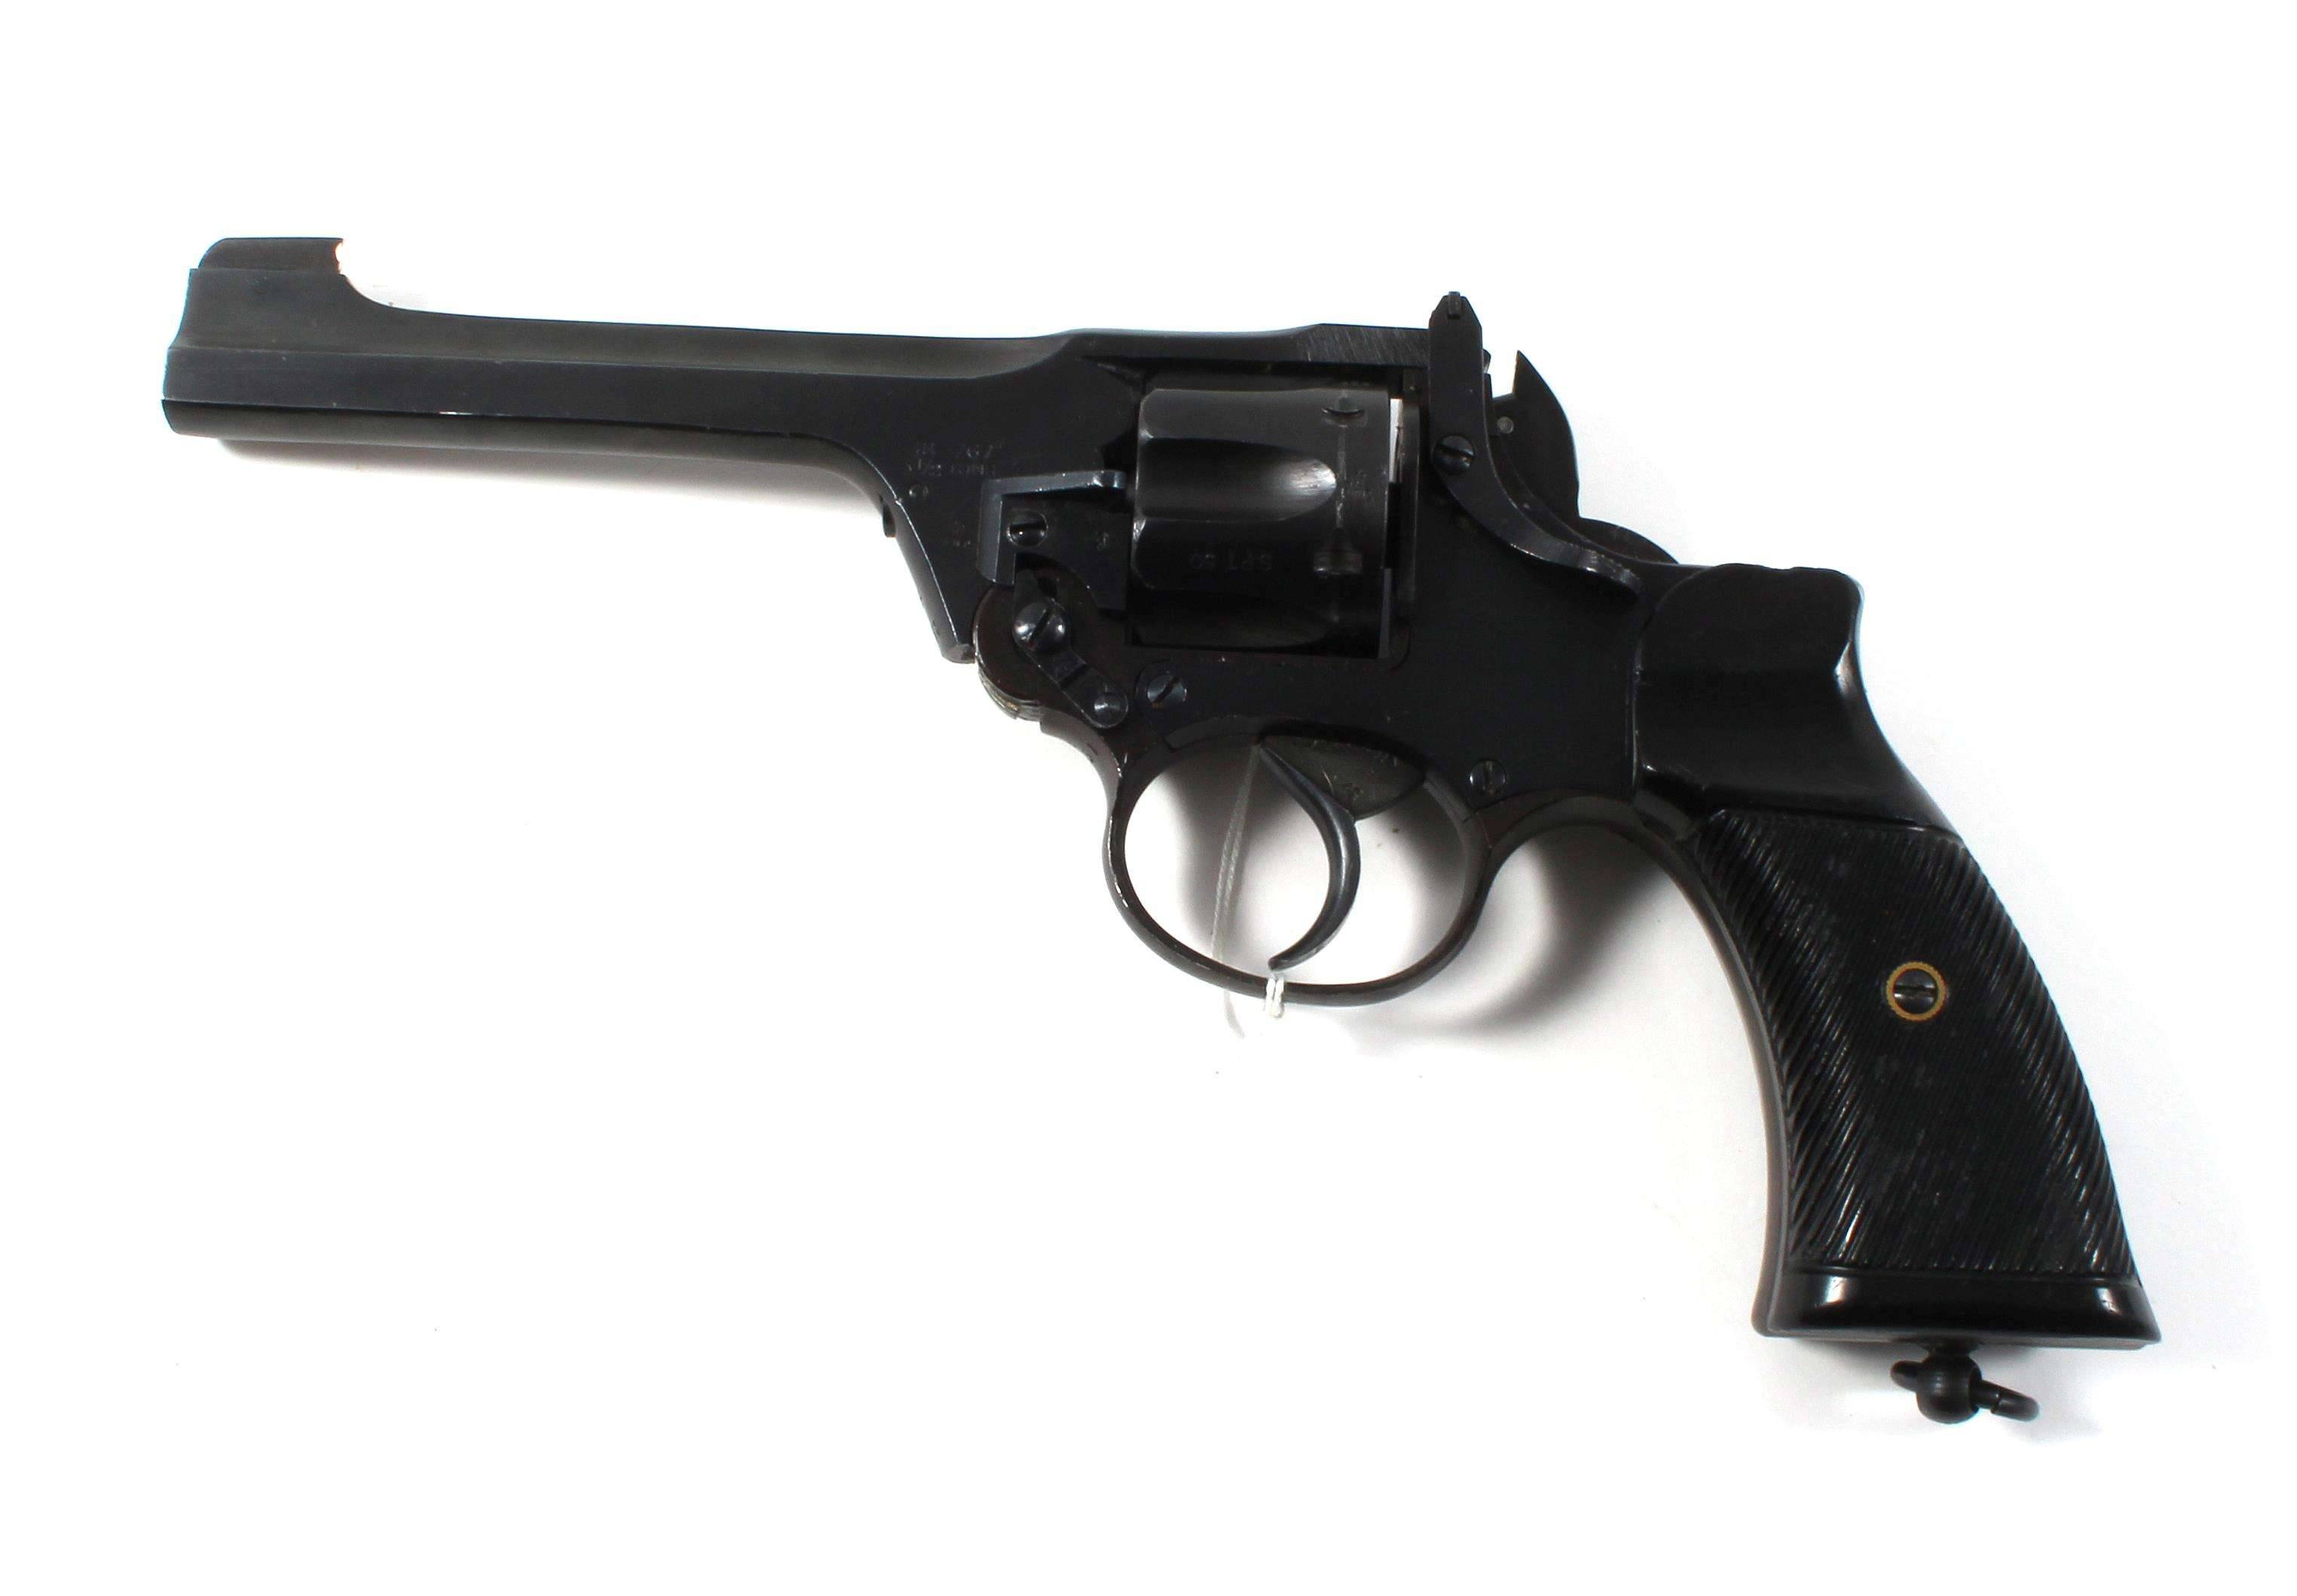 Enfield револьвера - enfield revolver - qwe.wiki